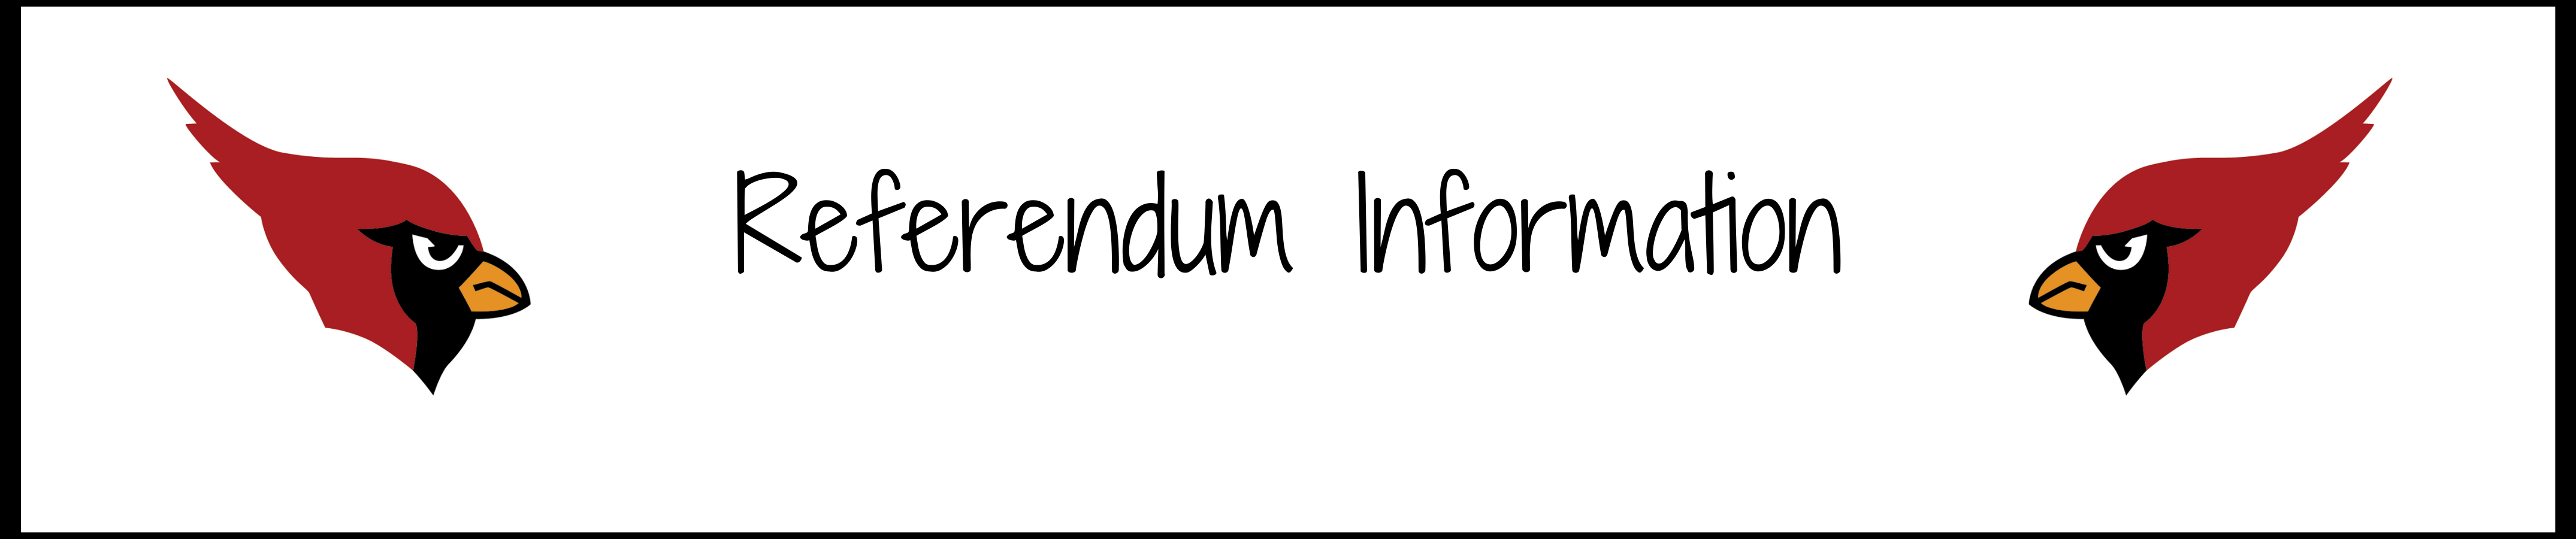 referendum information